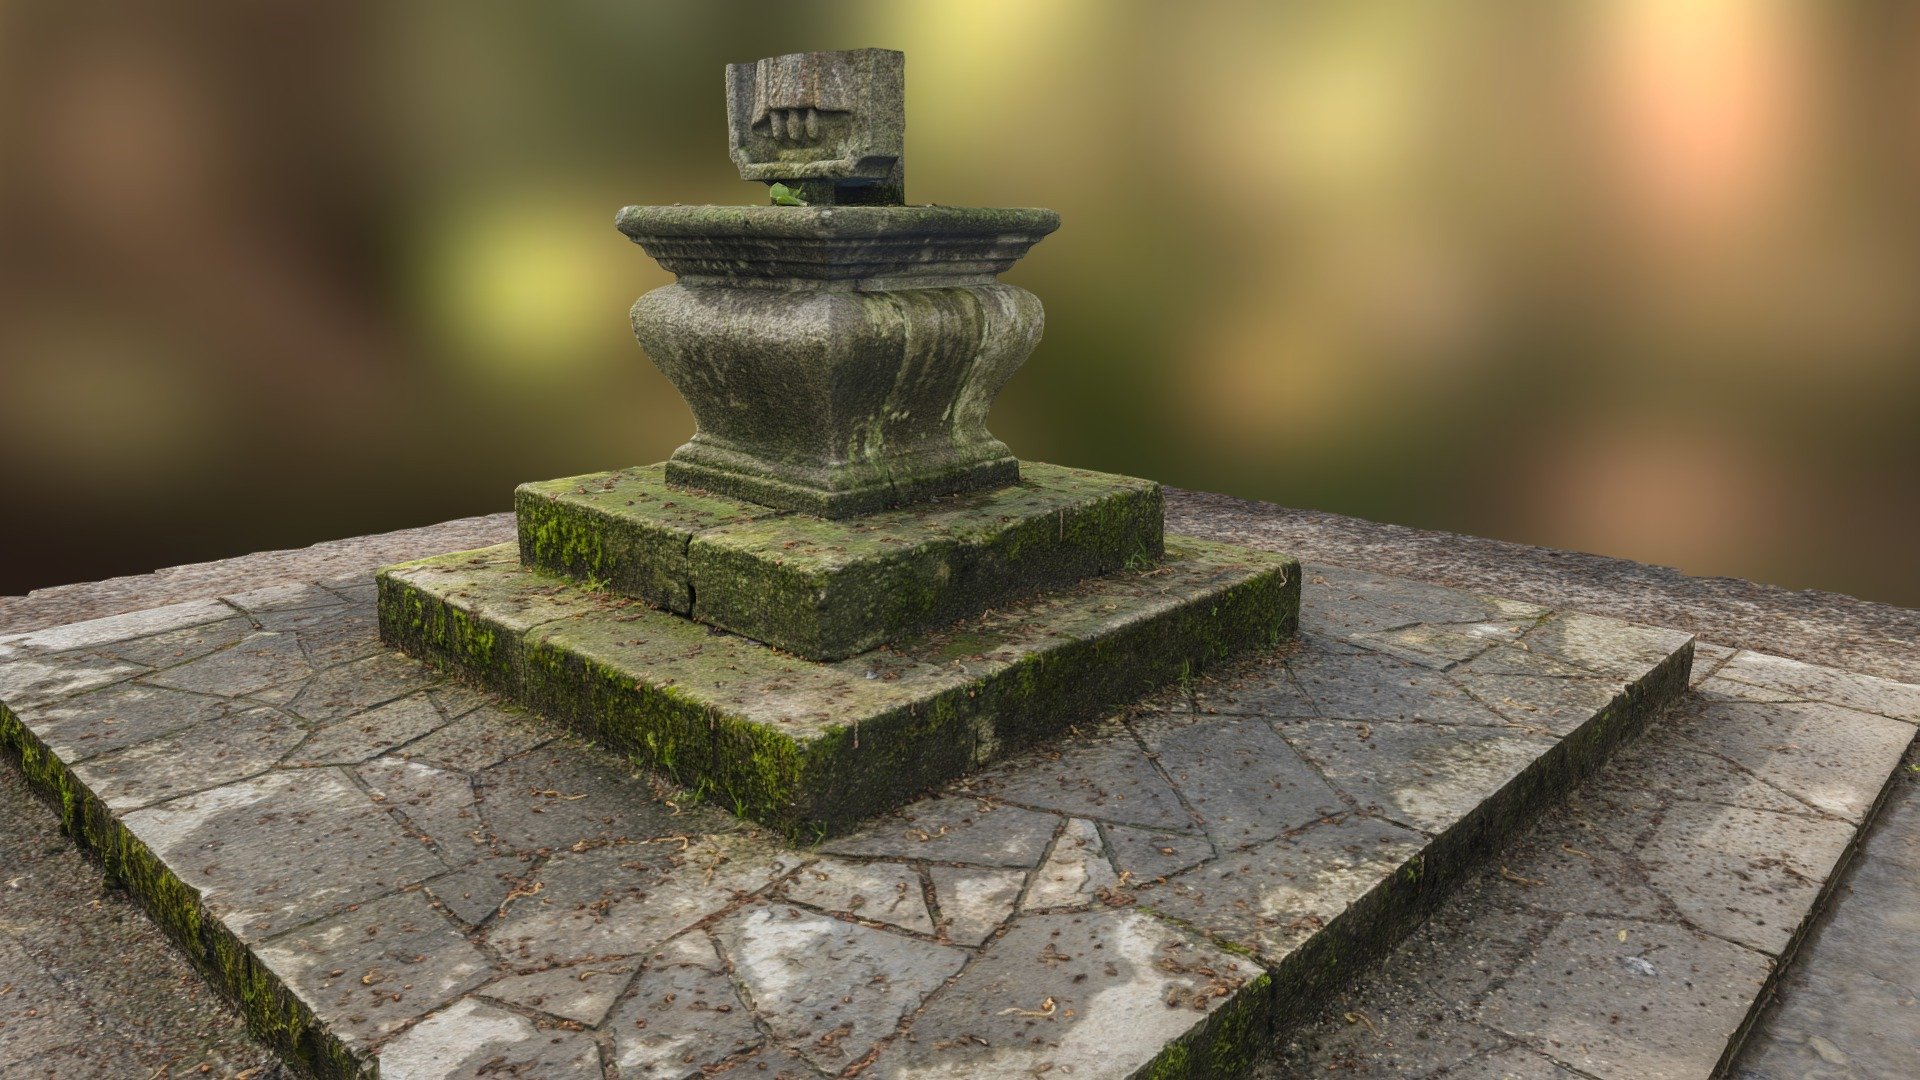 Mossy stone pedestal scan